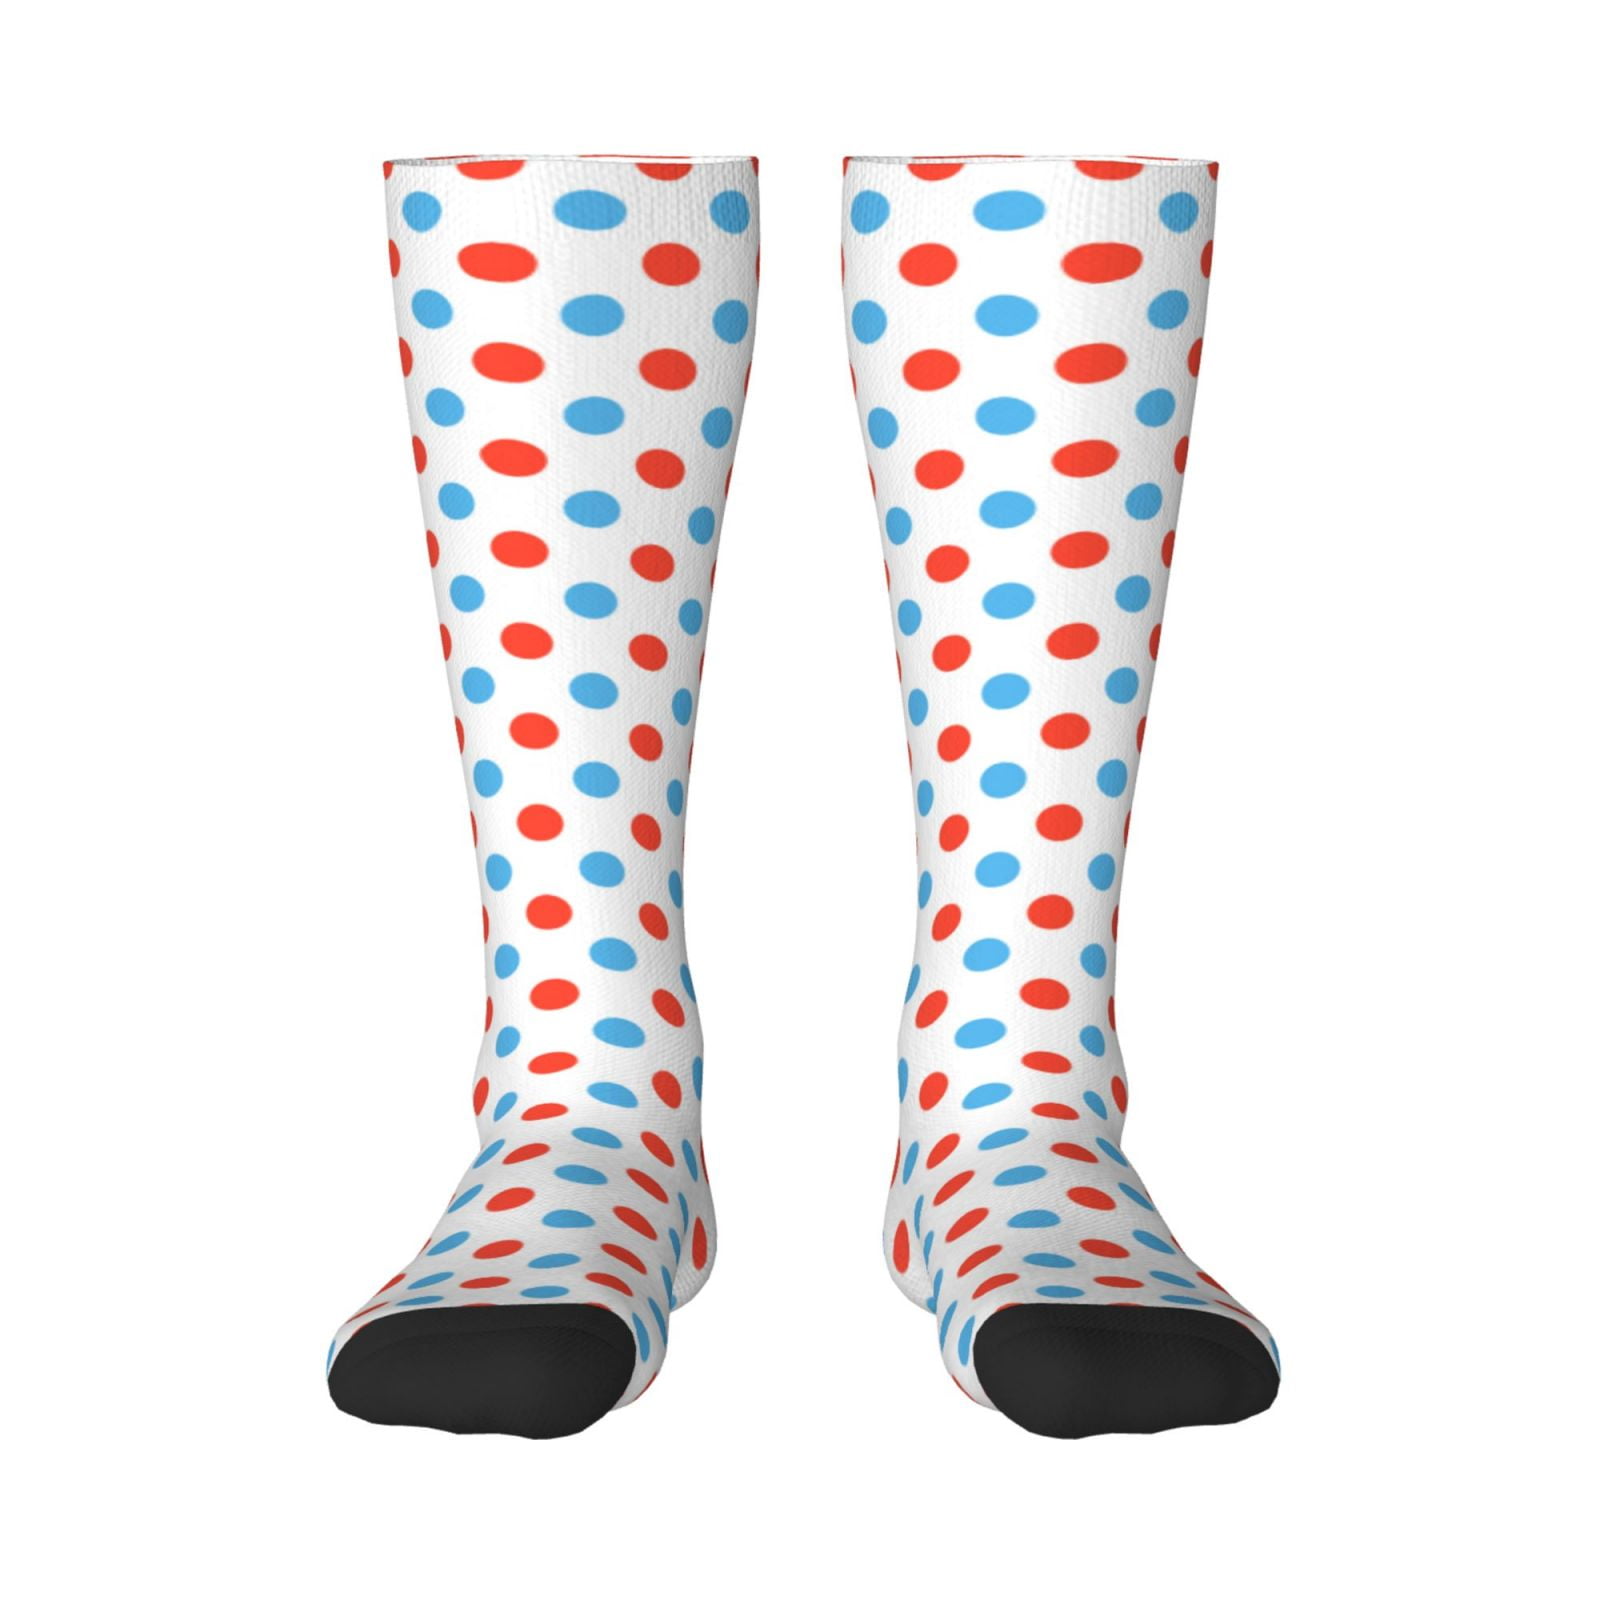 Daiia Sports Socks Red Blue Polka Dots Printed Novelty Crew Socks for ...